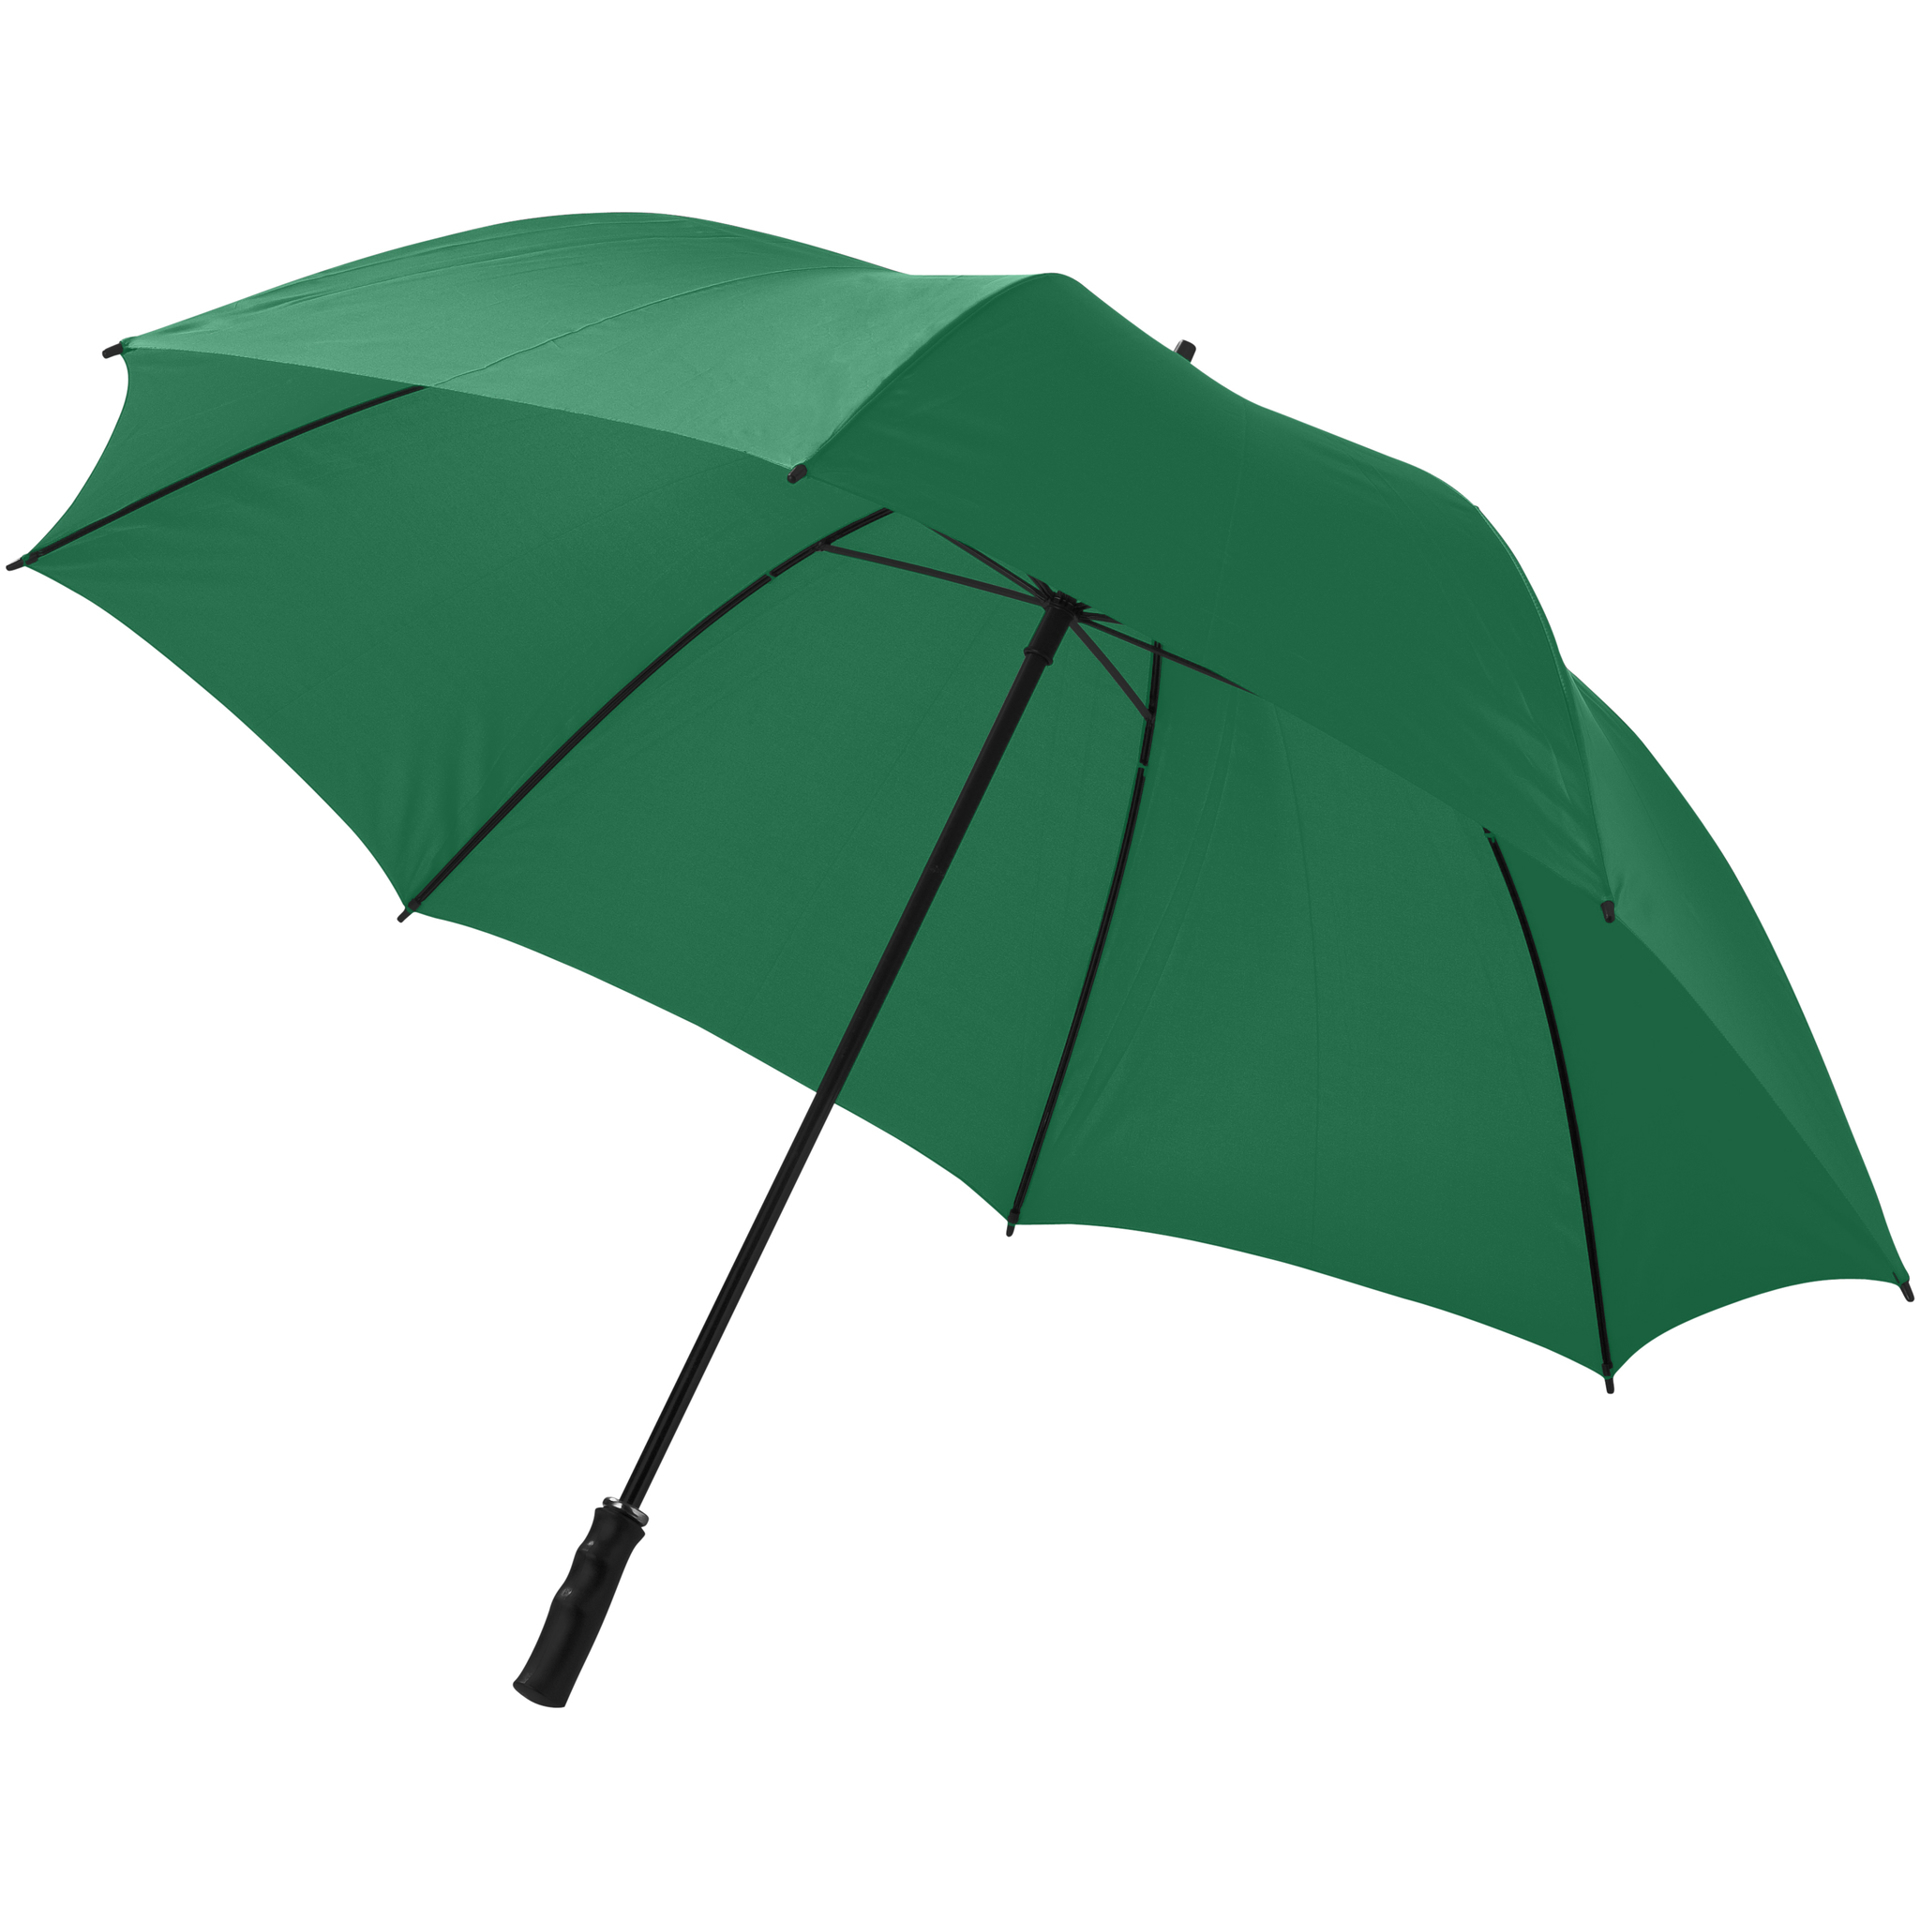 30 inch Golf Umbrella in bottle green